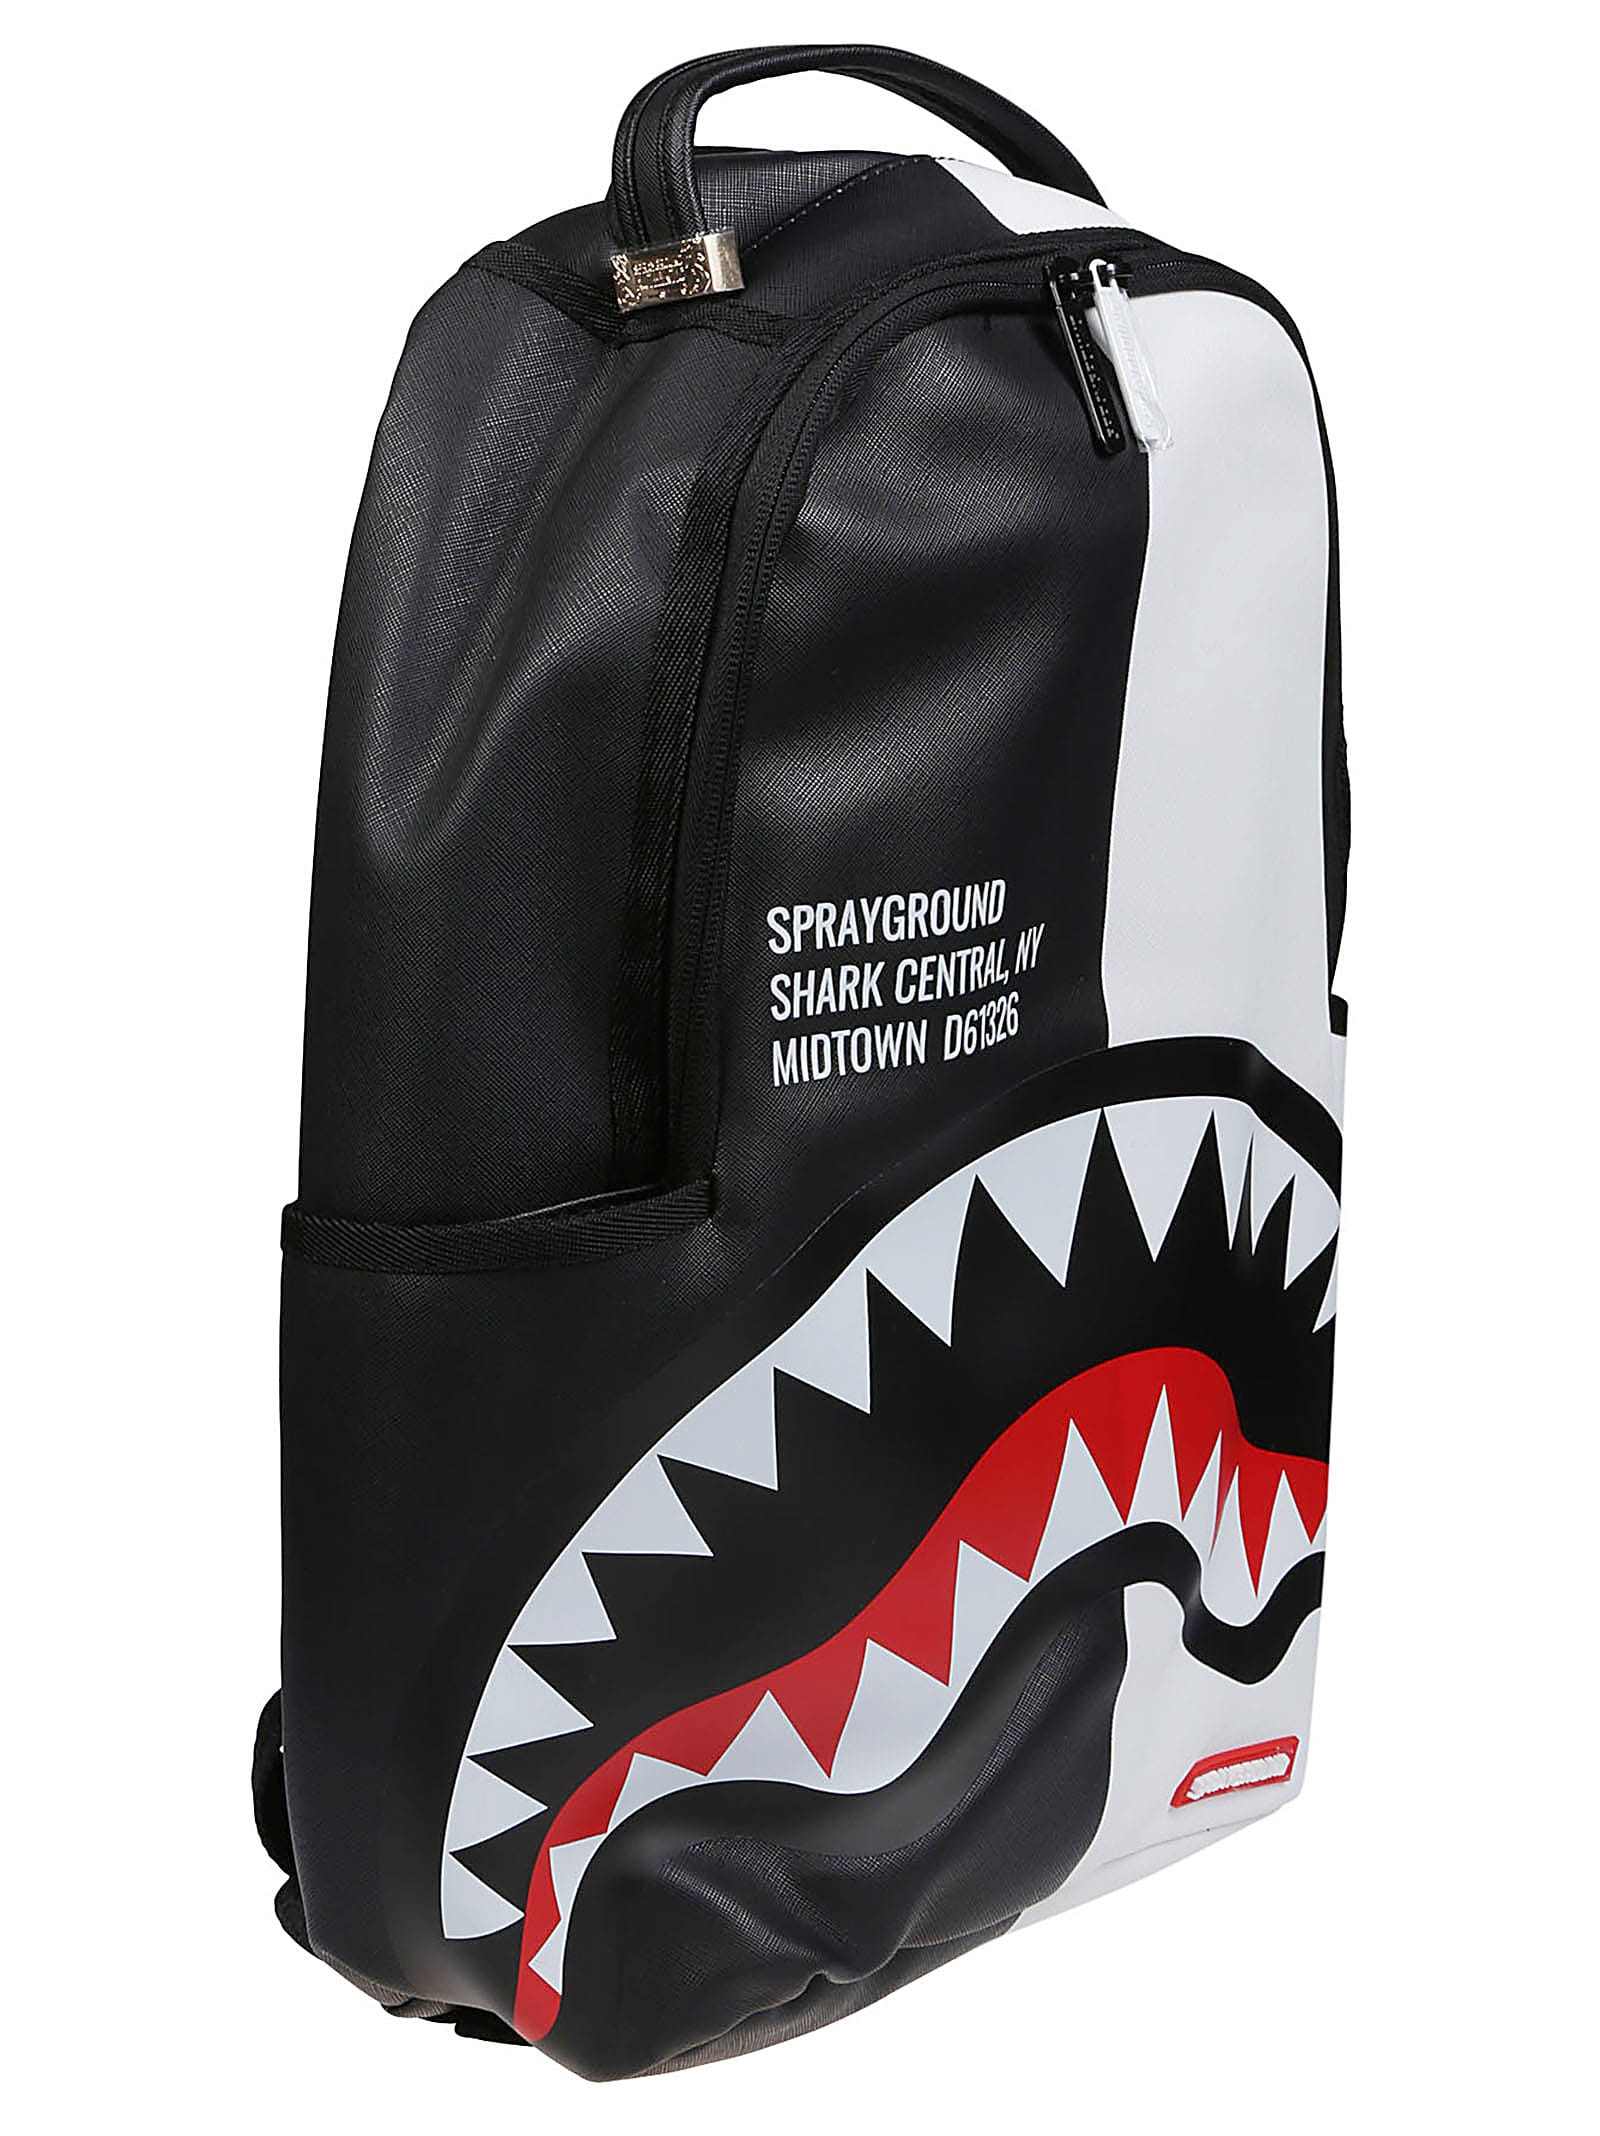 Sprayground, Bags, Sprayground Backpack Limited Edition Sprayground Shark  Central Ny Midtown